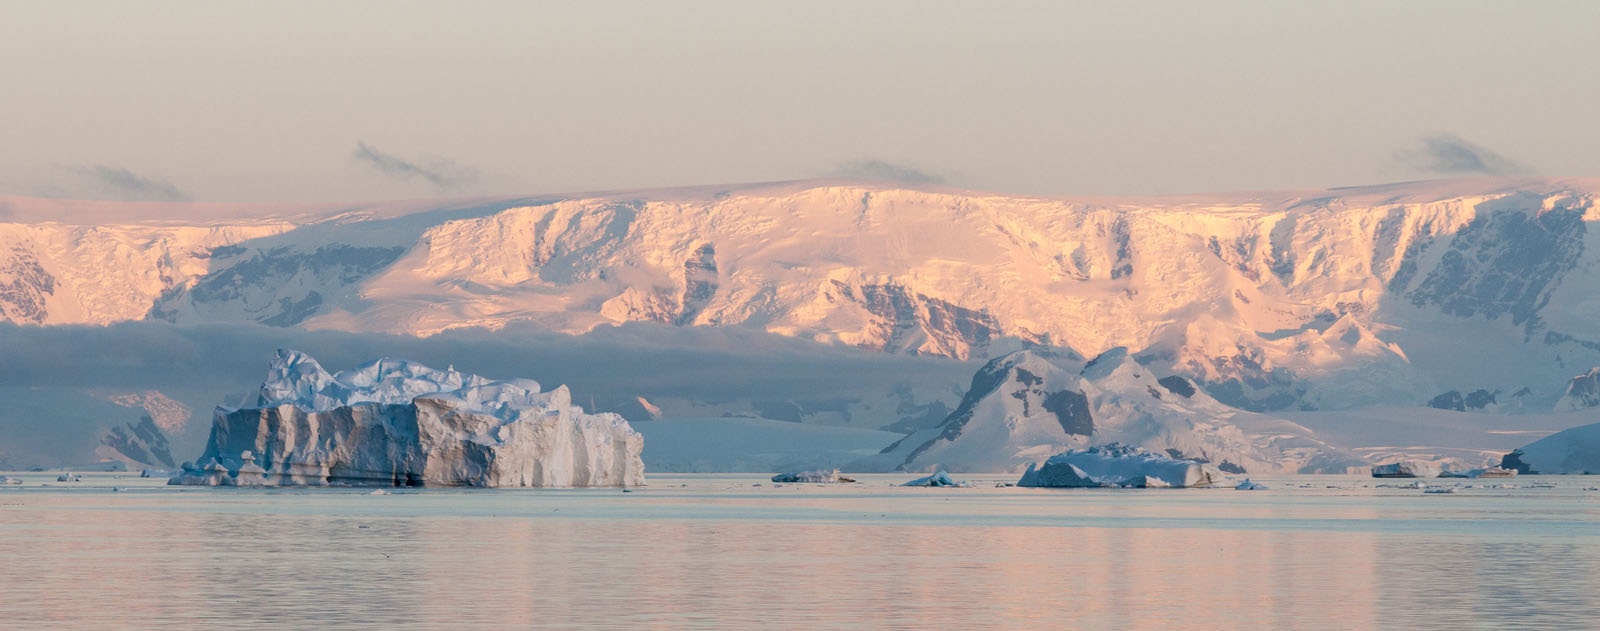 Mountains and icebergs | Gerlache Strait |  Antarctica